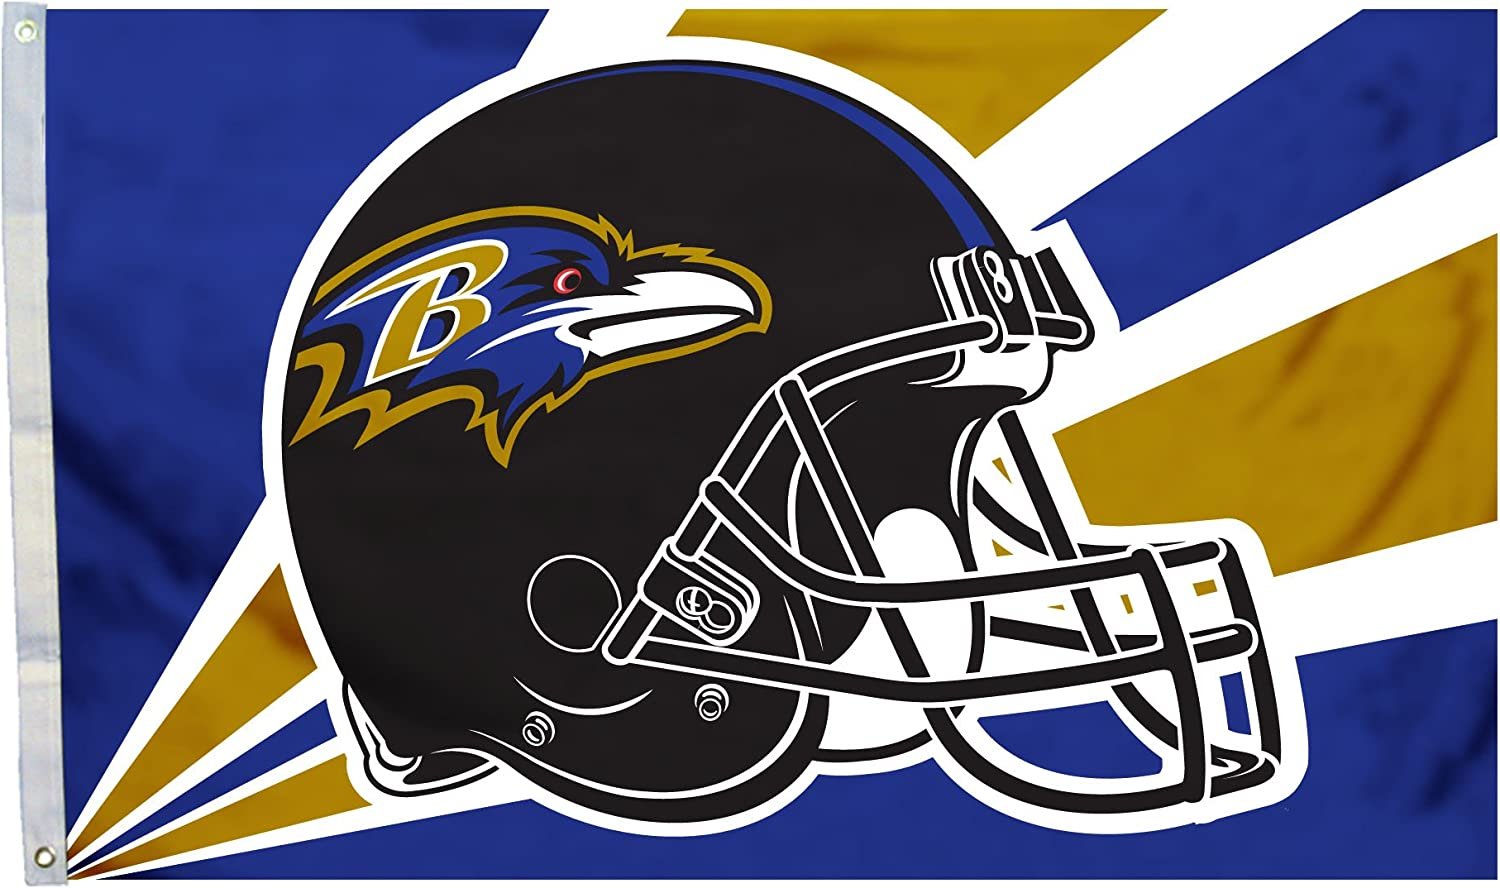 Baltimore Ravens 3' x 5' Flag Banner with Metal Grommets Outdoor Helmet Design